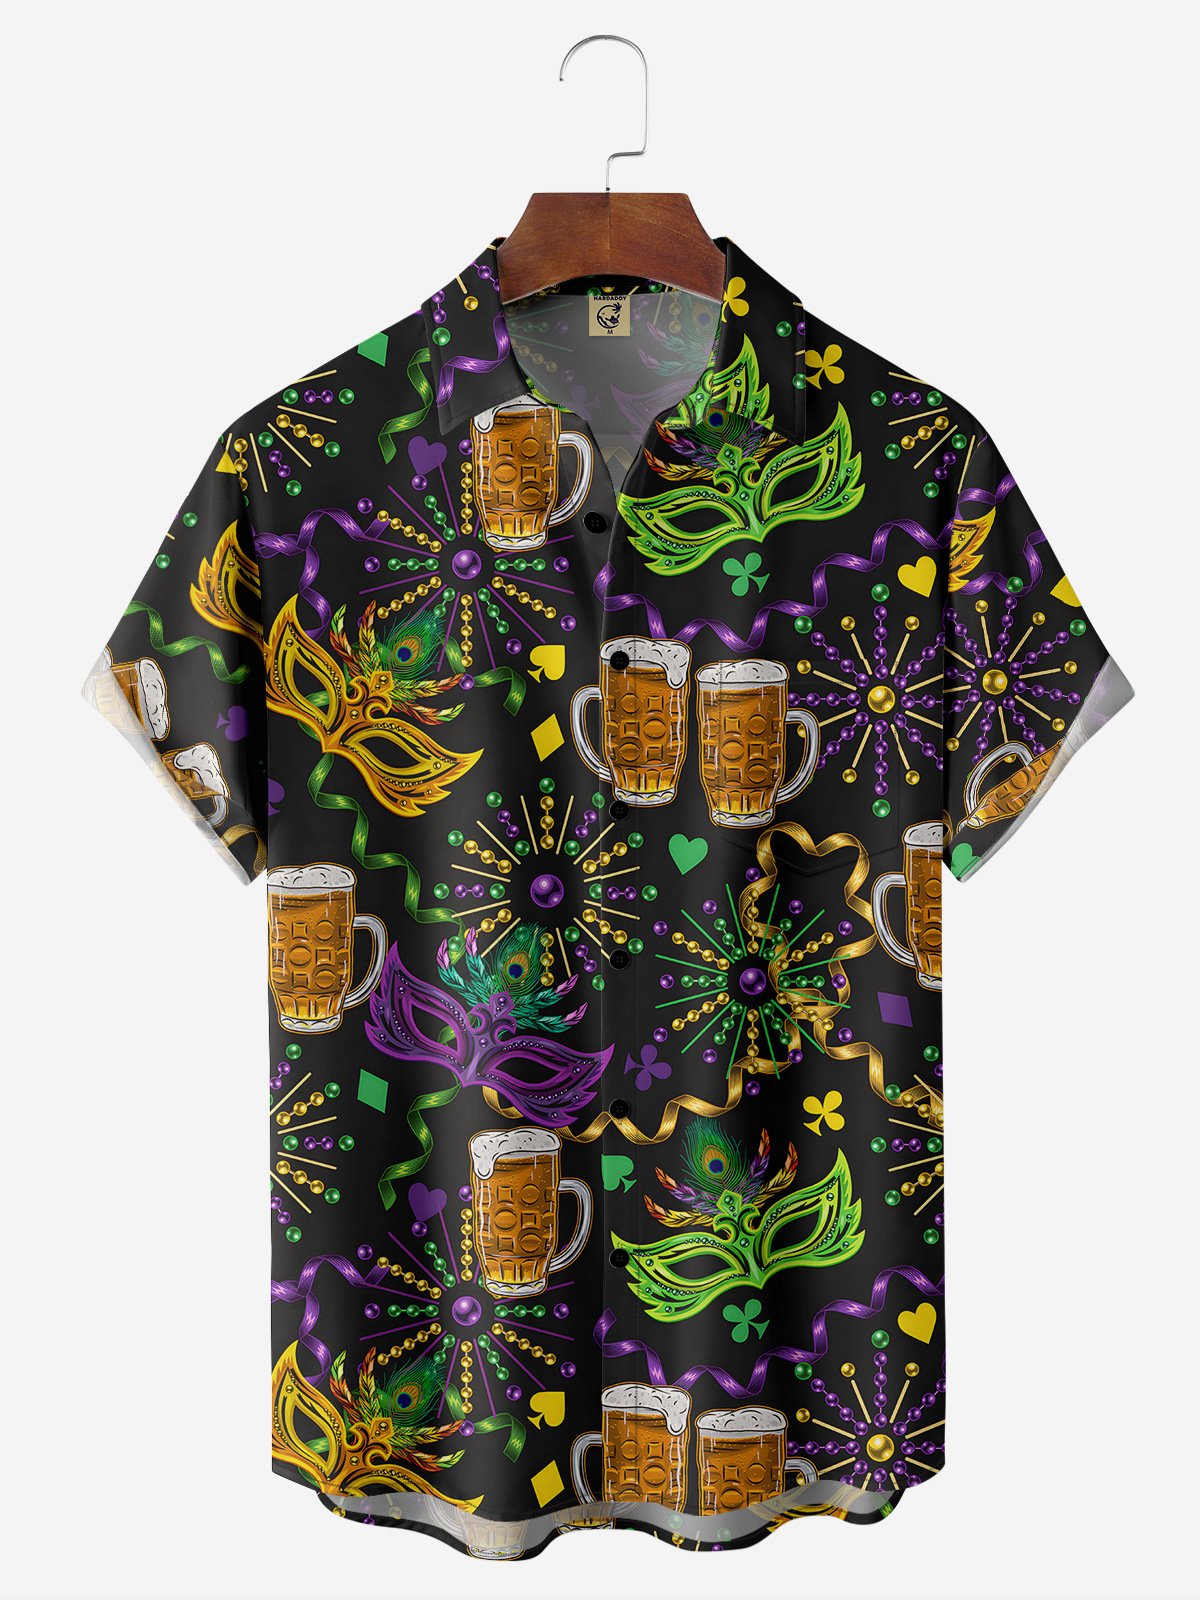 Hardaddy Mardi Gras Day Beer Shirt Regular Fit Black Chest Pocket Short Sleeve Casual Shirt For Men